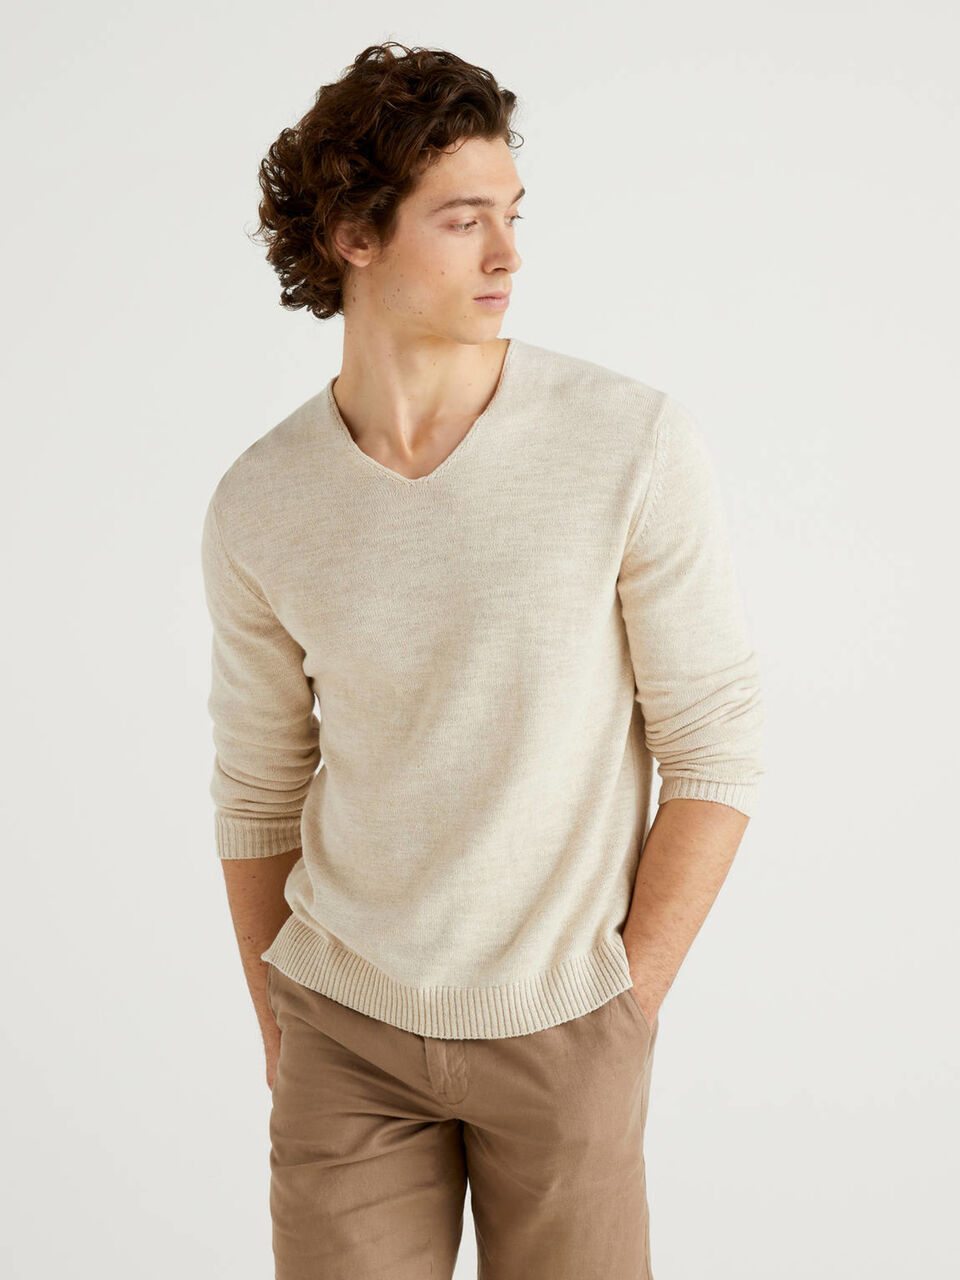 V-neck sweater in linen blend cotton